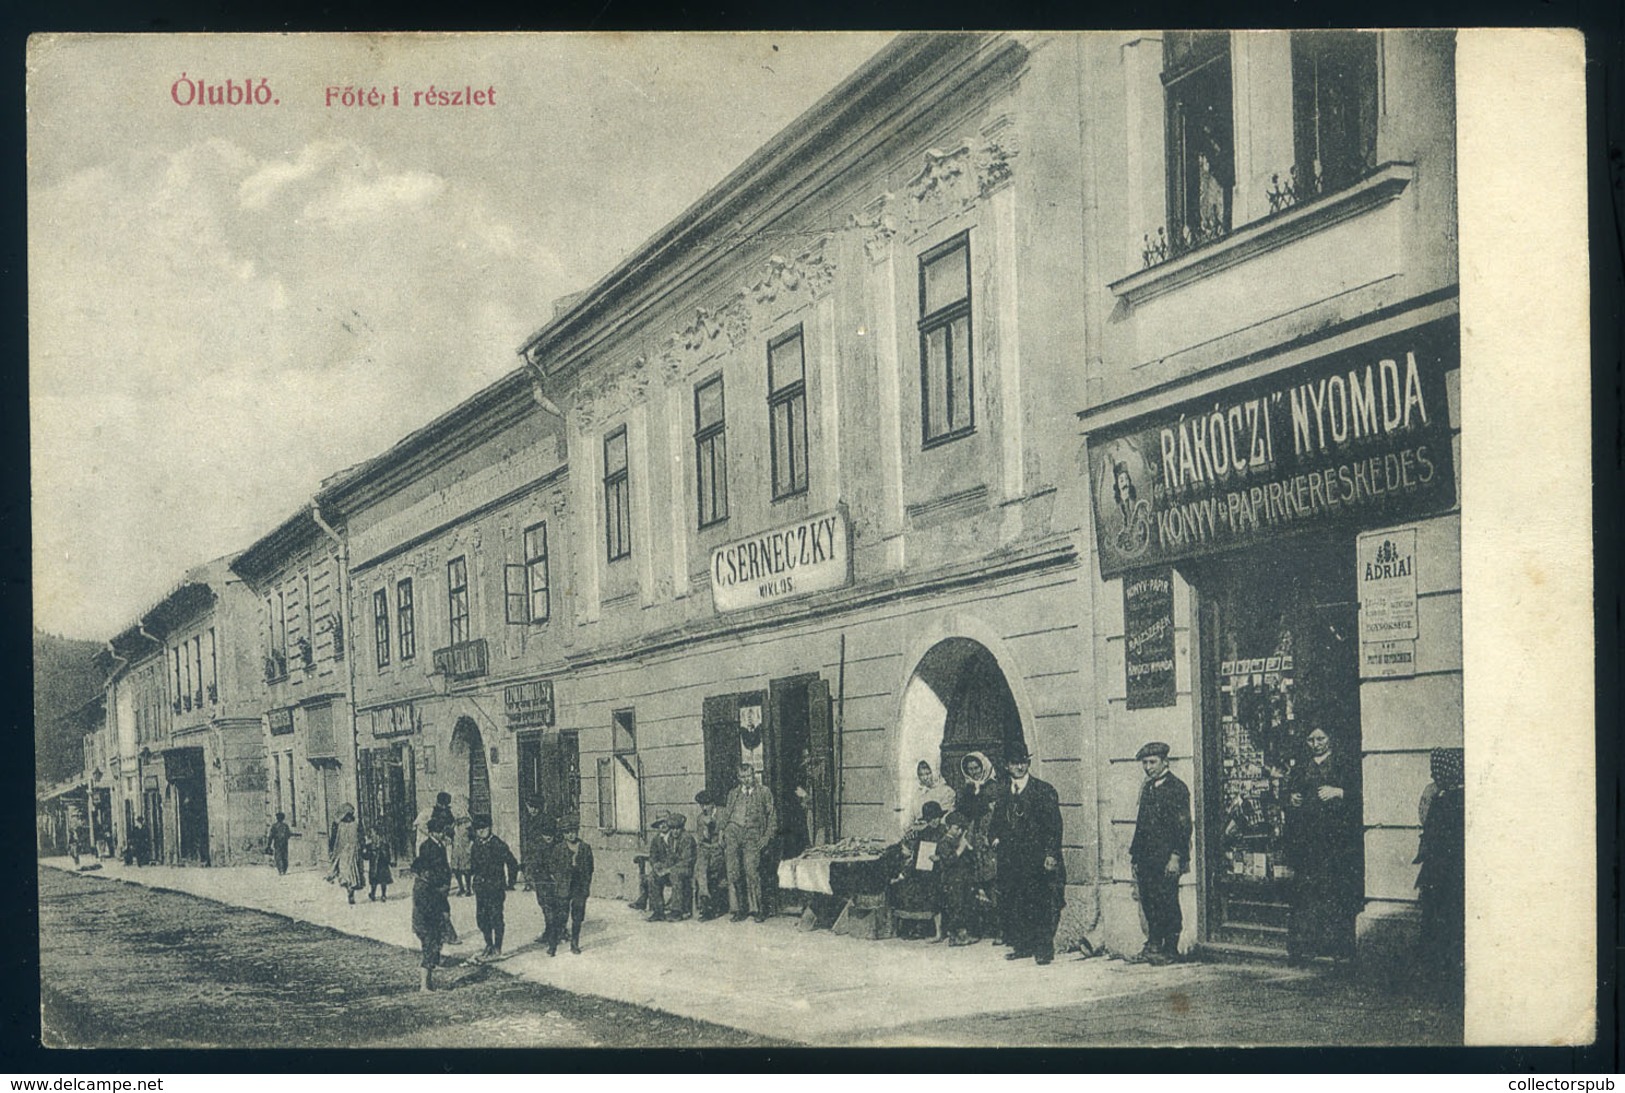 97271 LUBLÓ 1914. Régi Képeslap, üzletek, Nyomda  /  LUBLÓ 1914 Vintage Pic. P.card HUNGARY / SLOVAKIA - Hungary